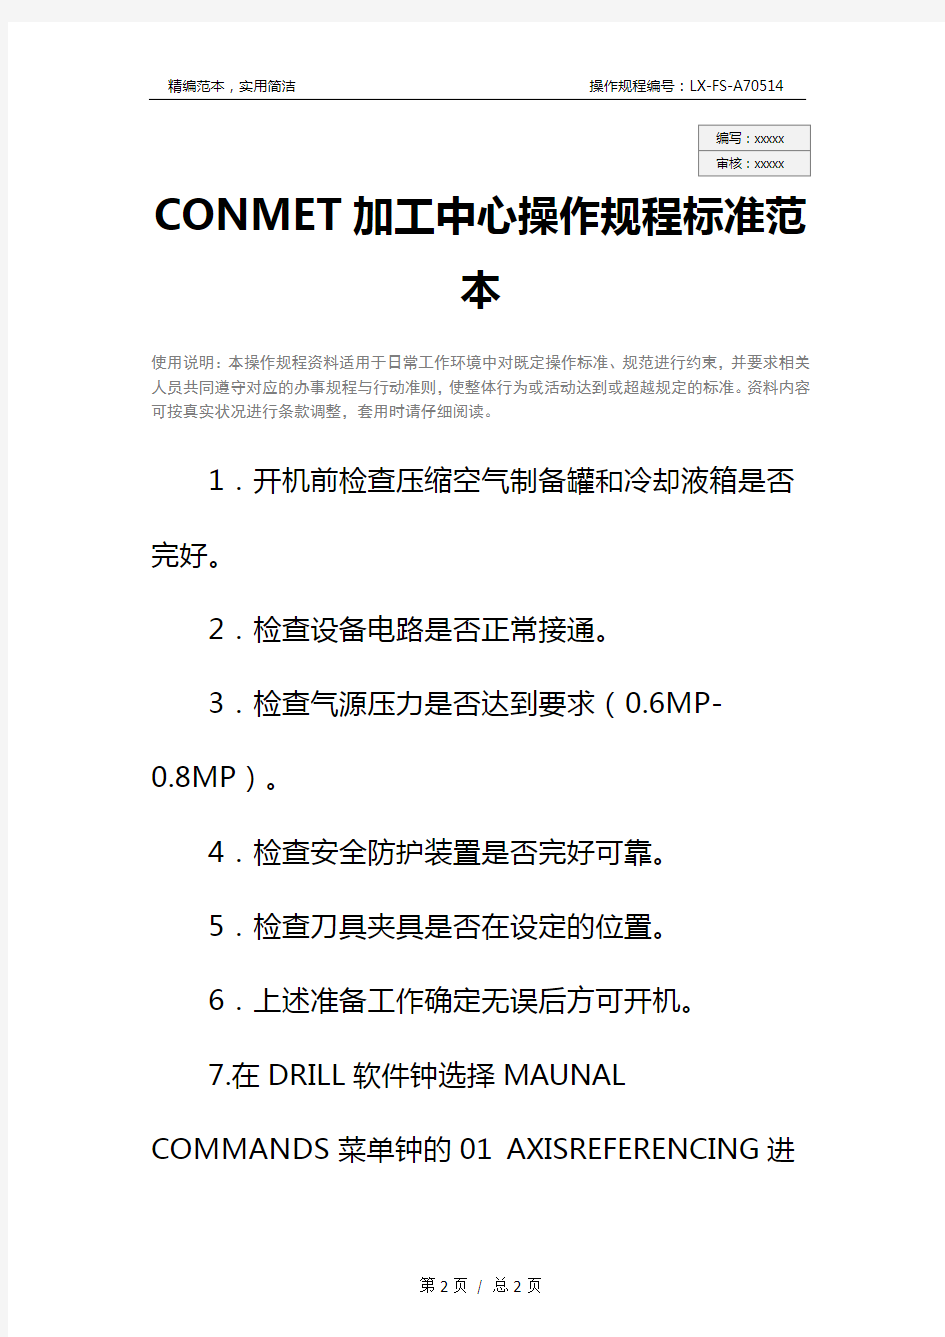 CONMET加工中心操作规程标准范本